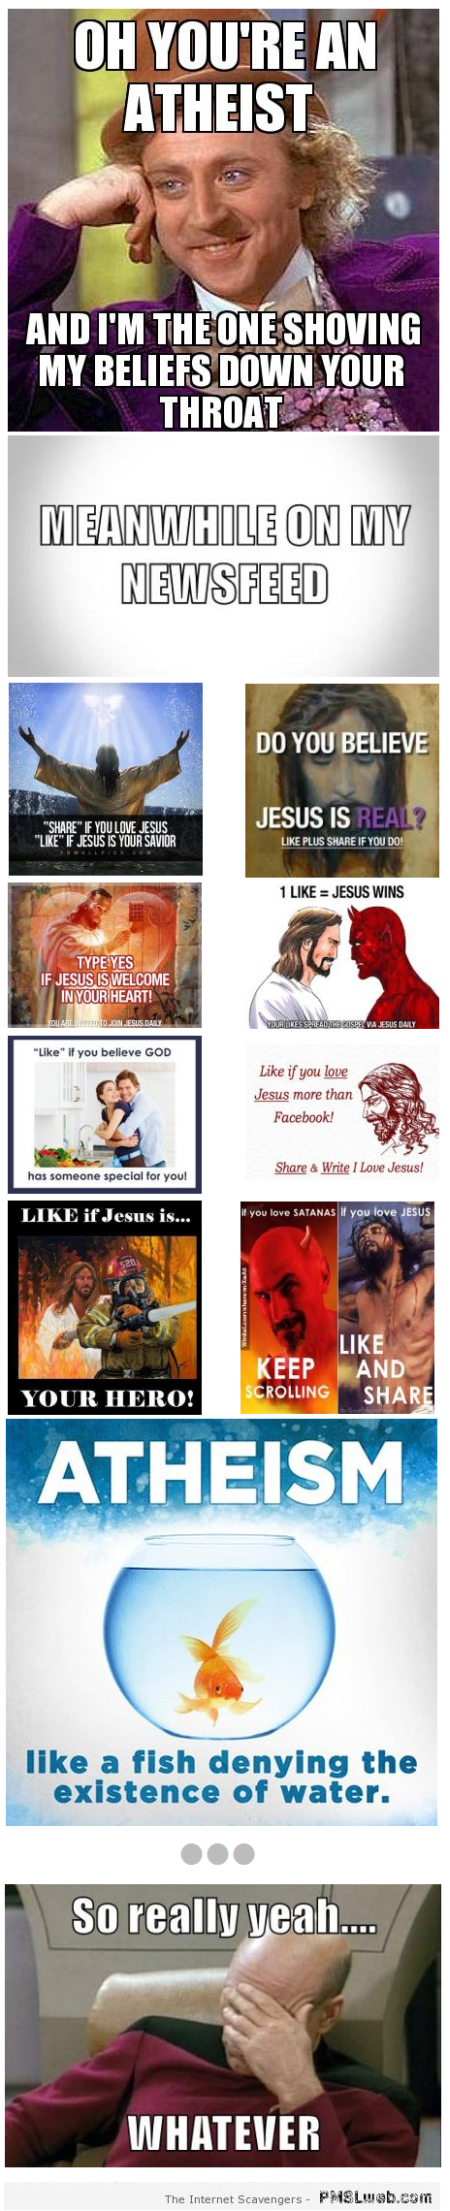 Religion on Facebook humor at PMSLweb.com